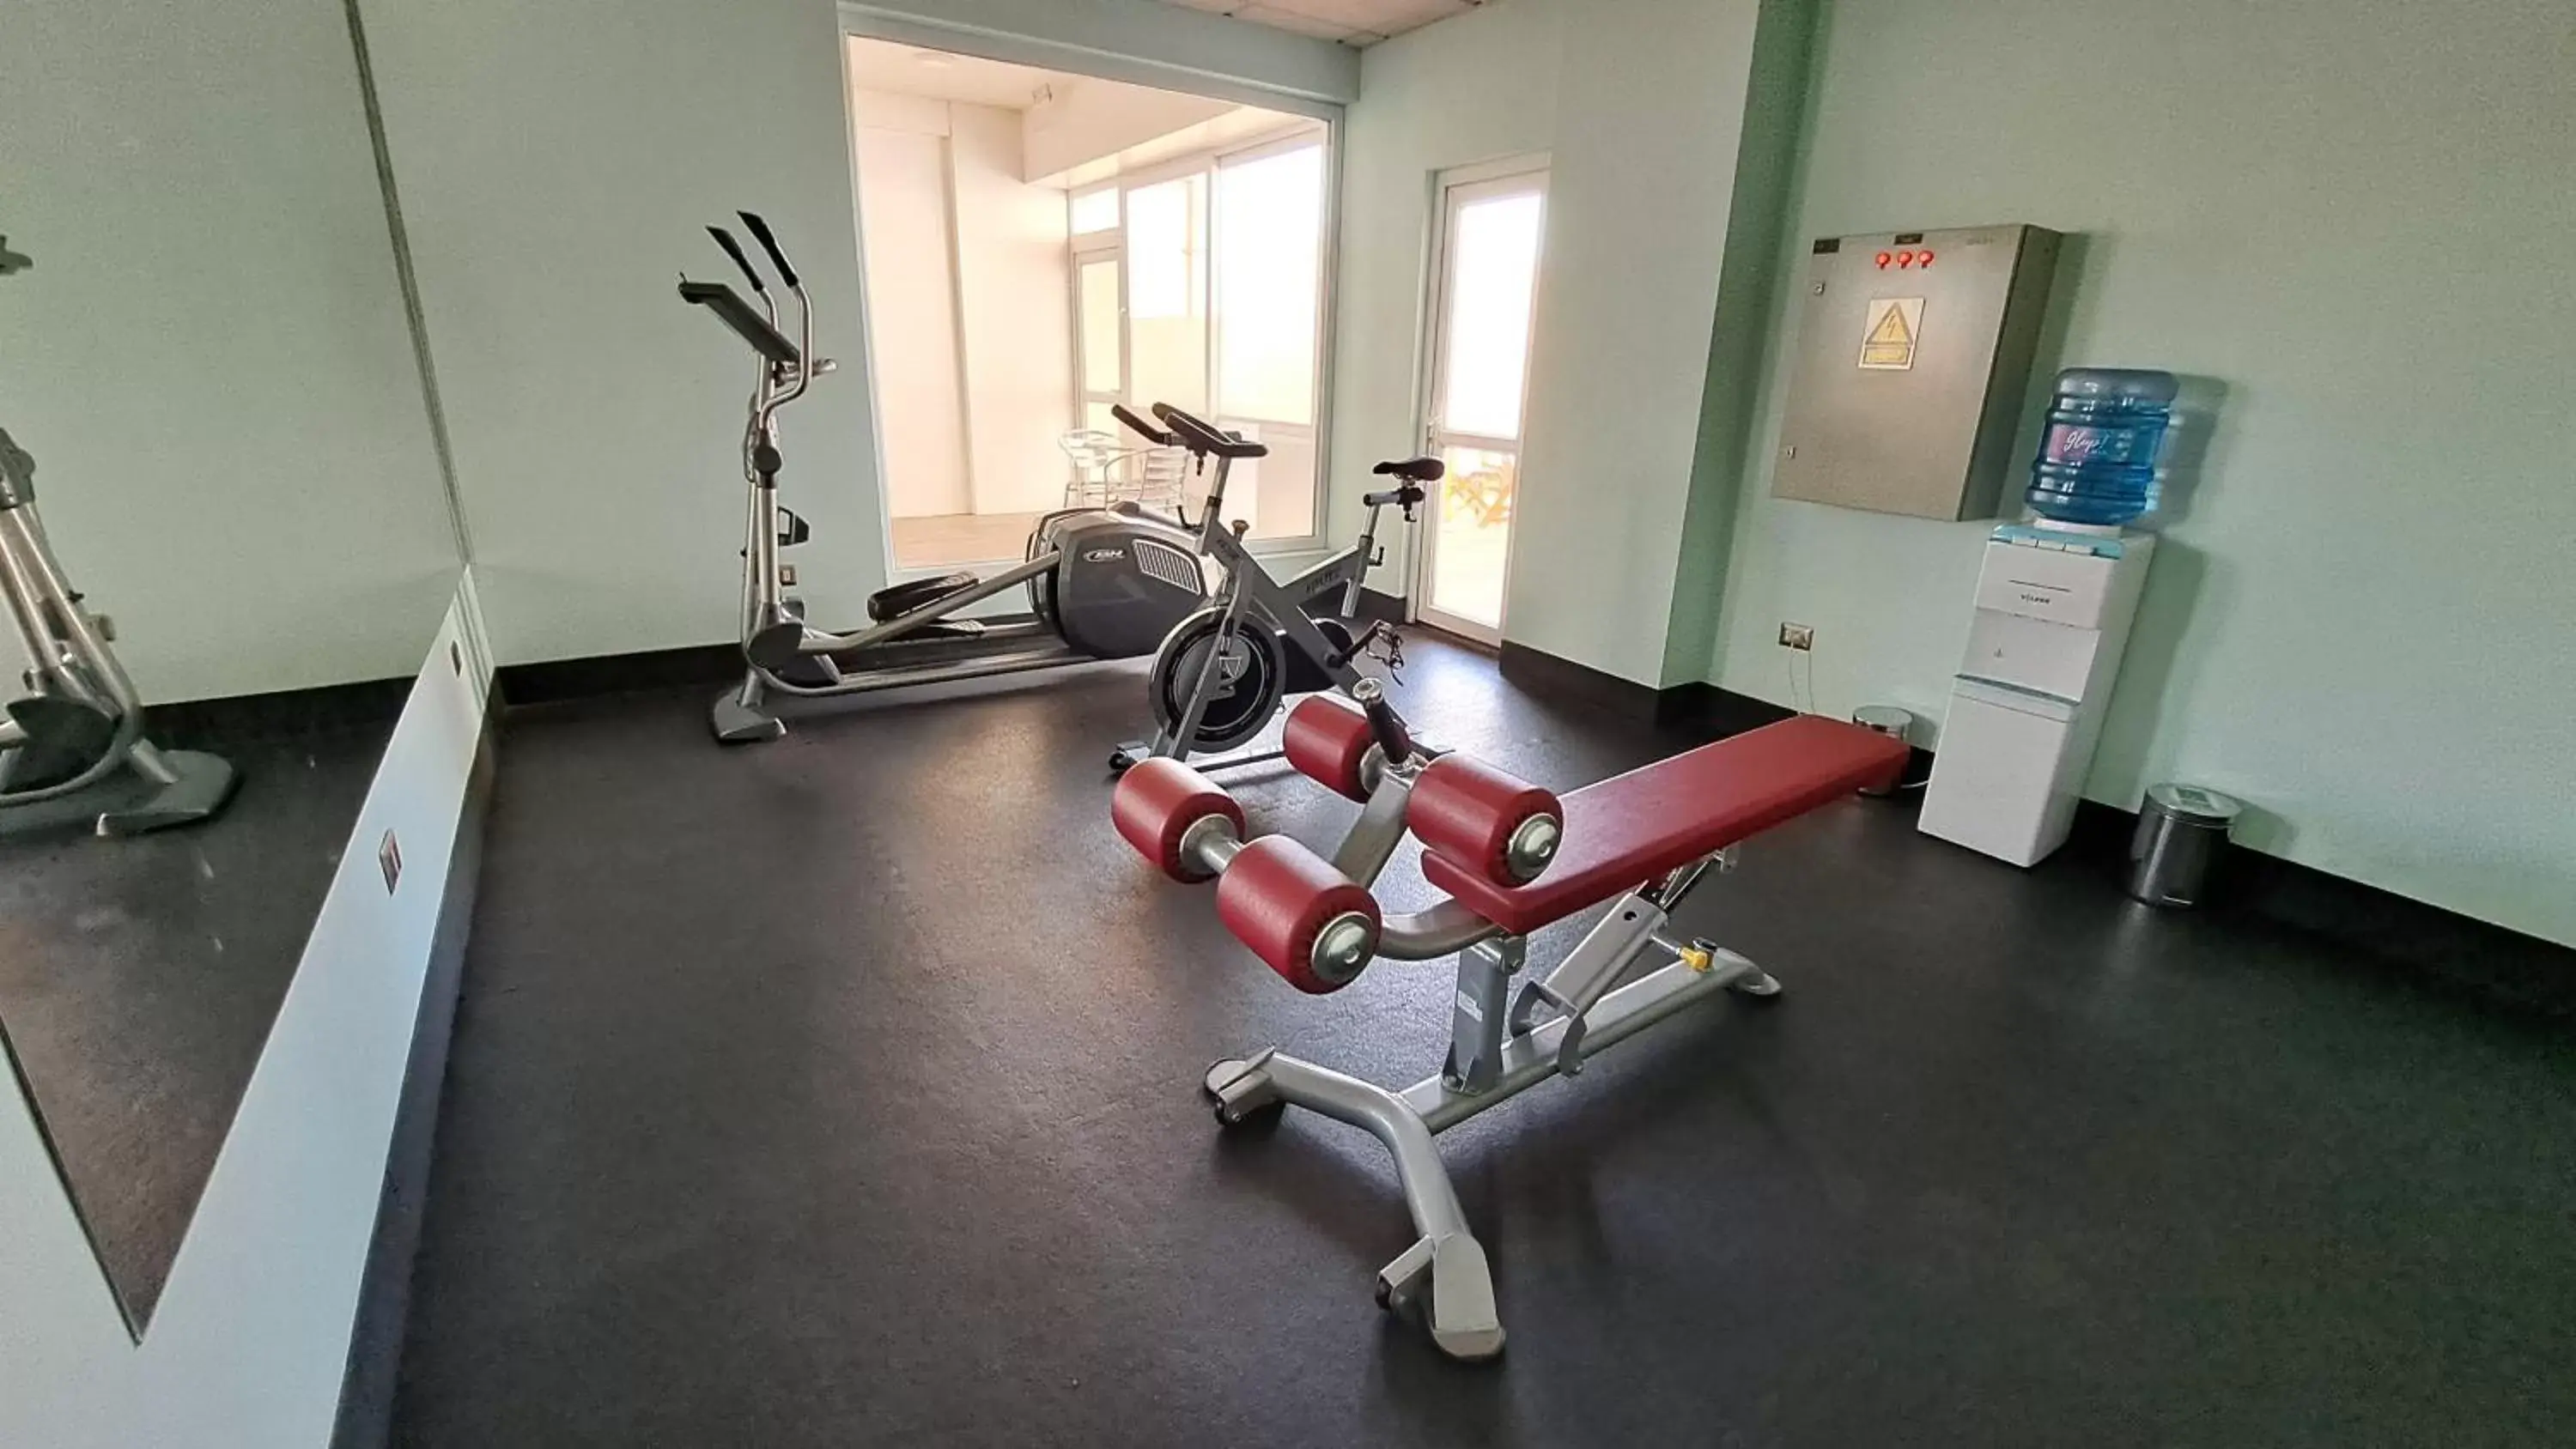 Fitness centre/facilities, Fitness Center/Facilities in Hotel Diego de Almagro Curicó